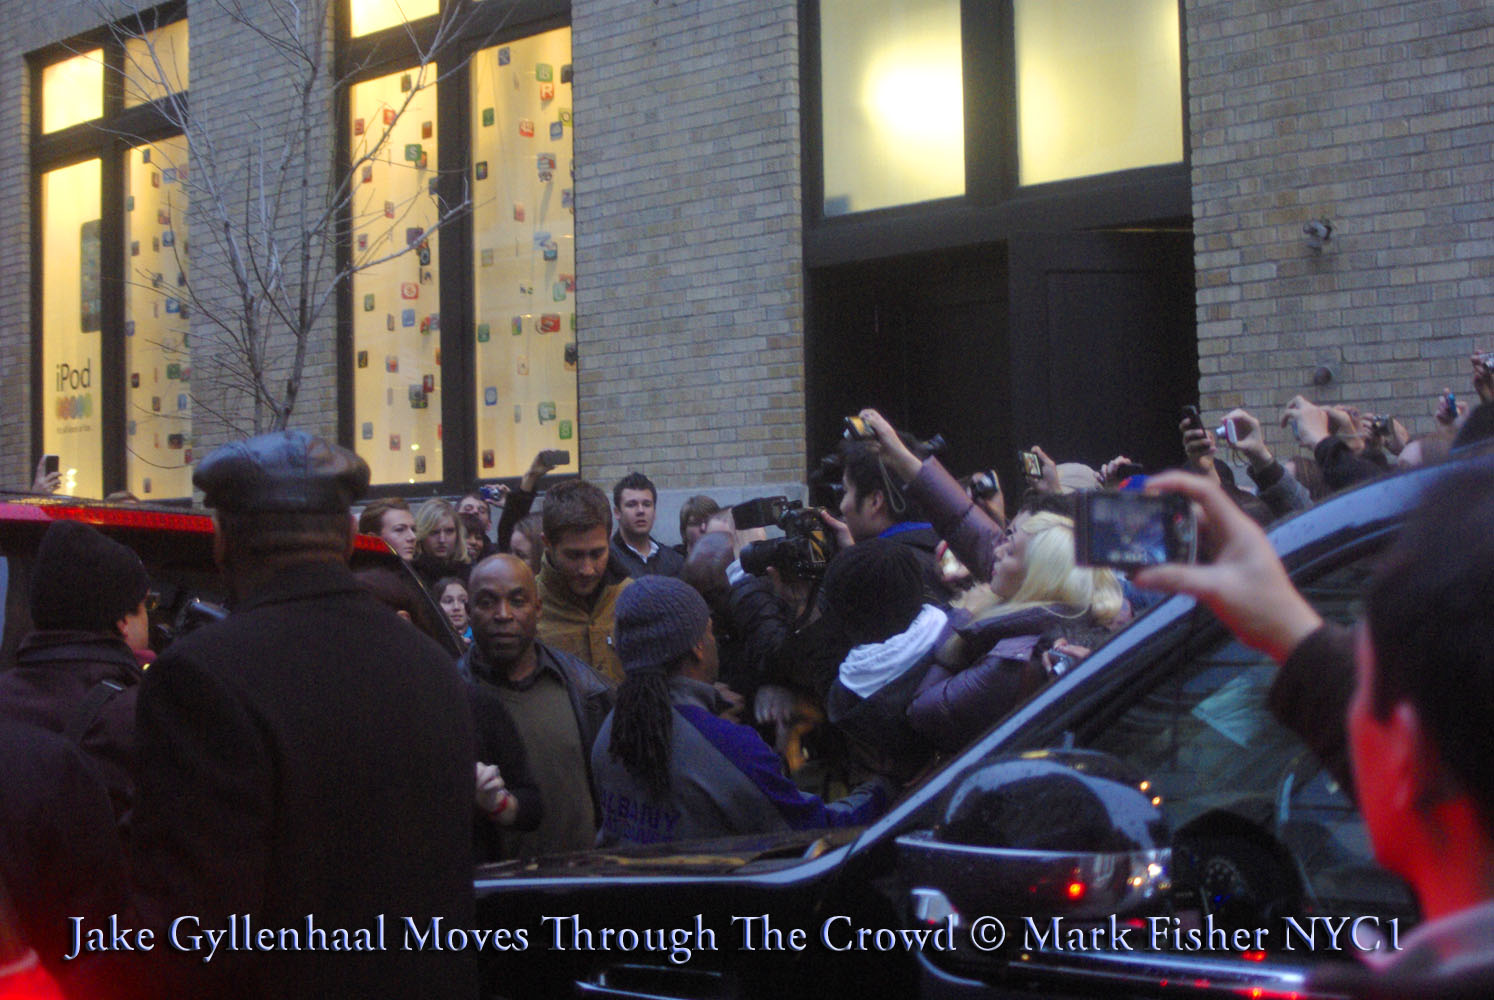 http://4.bp.blogspot.com/-4wZRCJvZtuM/TZdWh0V7o8I/AAAAAAAACnQ/wp562MIcE38/s1600/Jake+Gyllenhaal+Moves+Through+The+Crowd+%25C2%25A9+Mark+Fisher+NYC1-6868.jpg